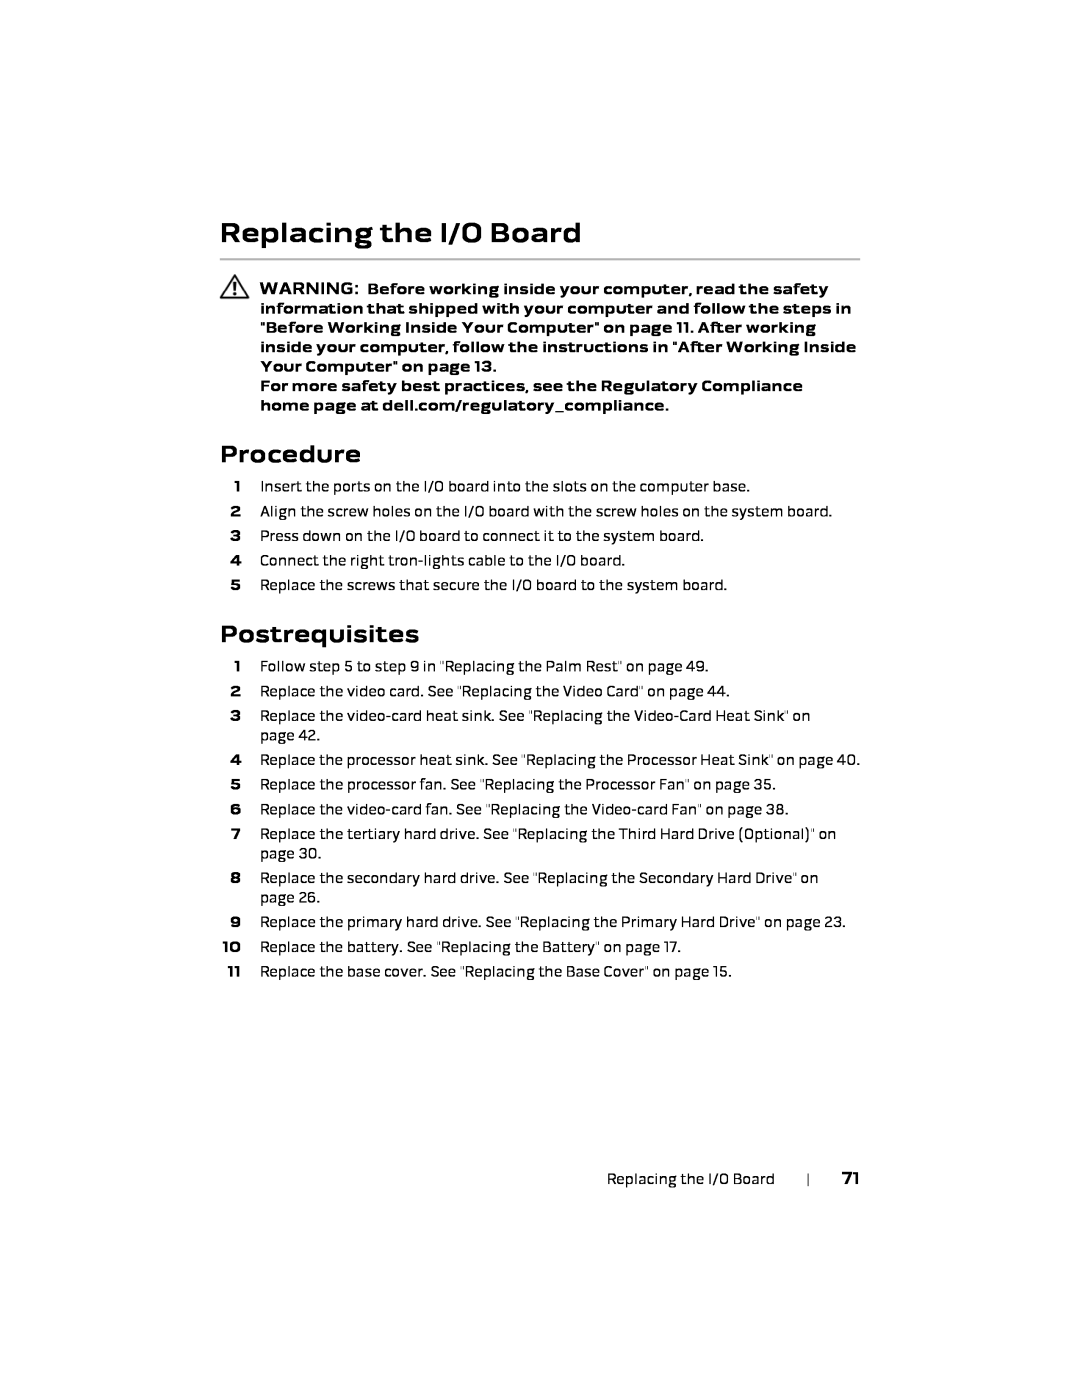 Alienware 17 R1, P18E owner manual Replacing the I/O Board, Procedure, Postrequisites 